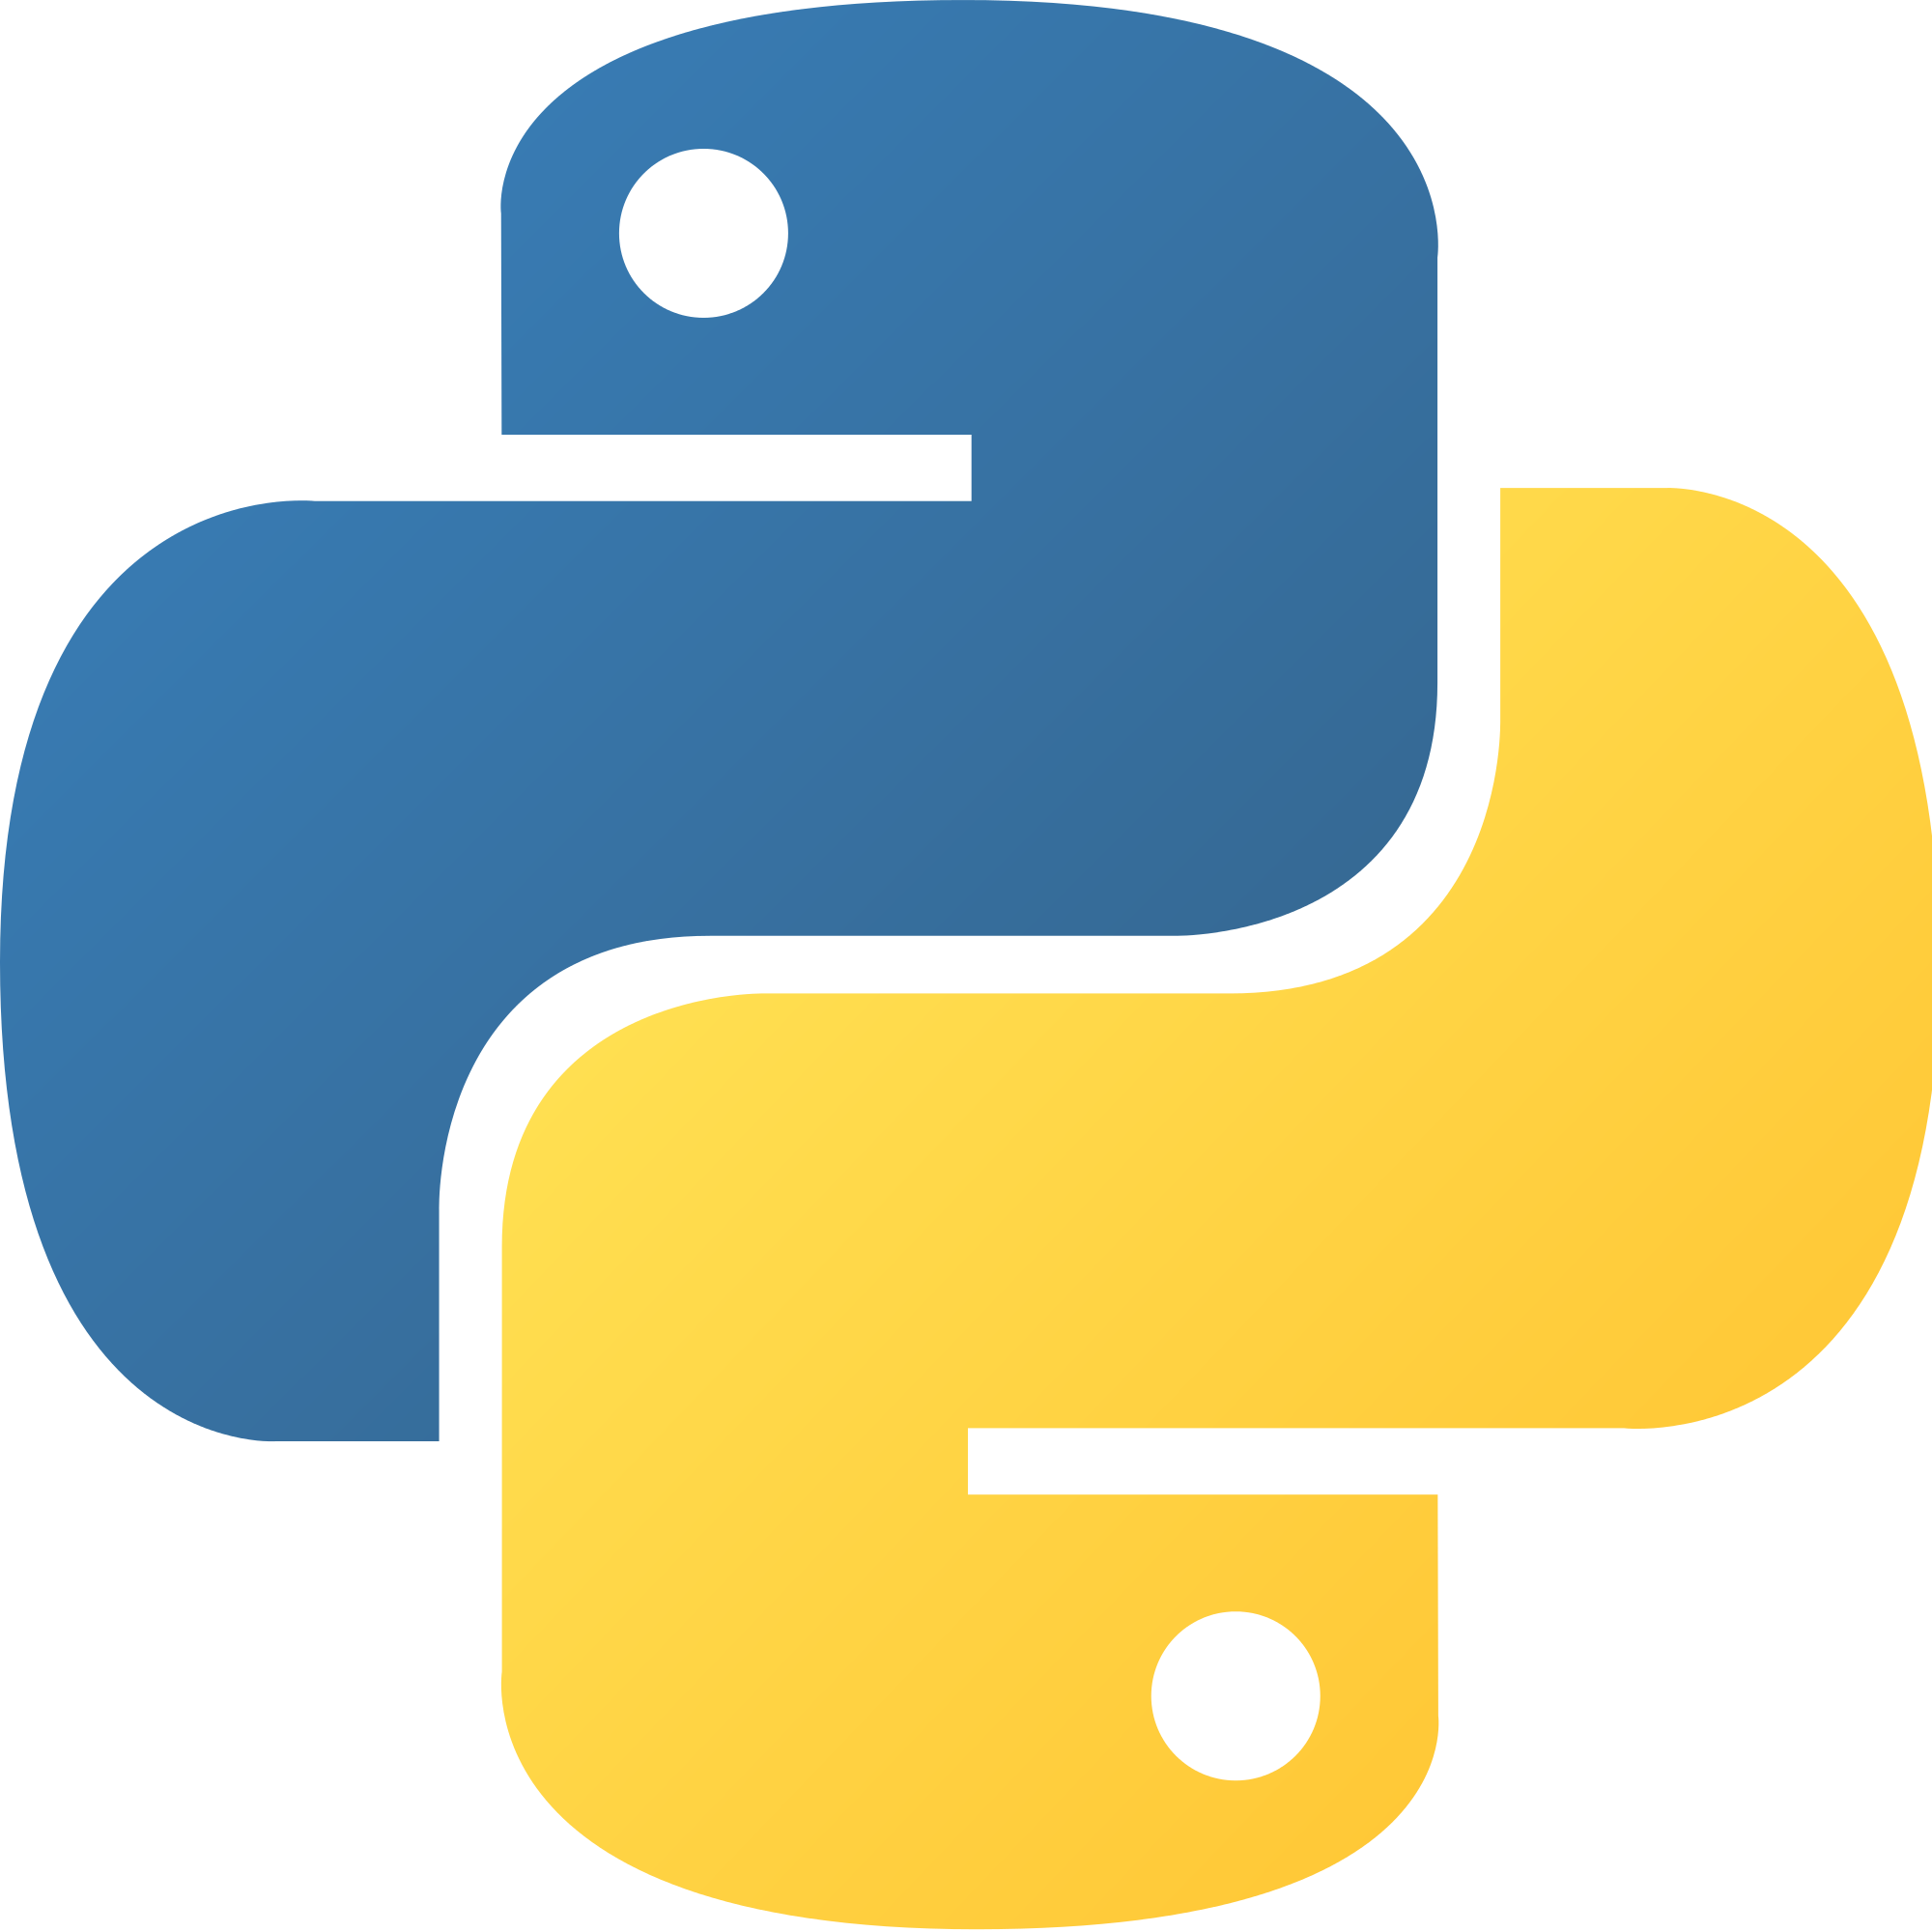 Python intodesk